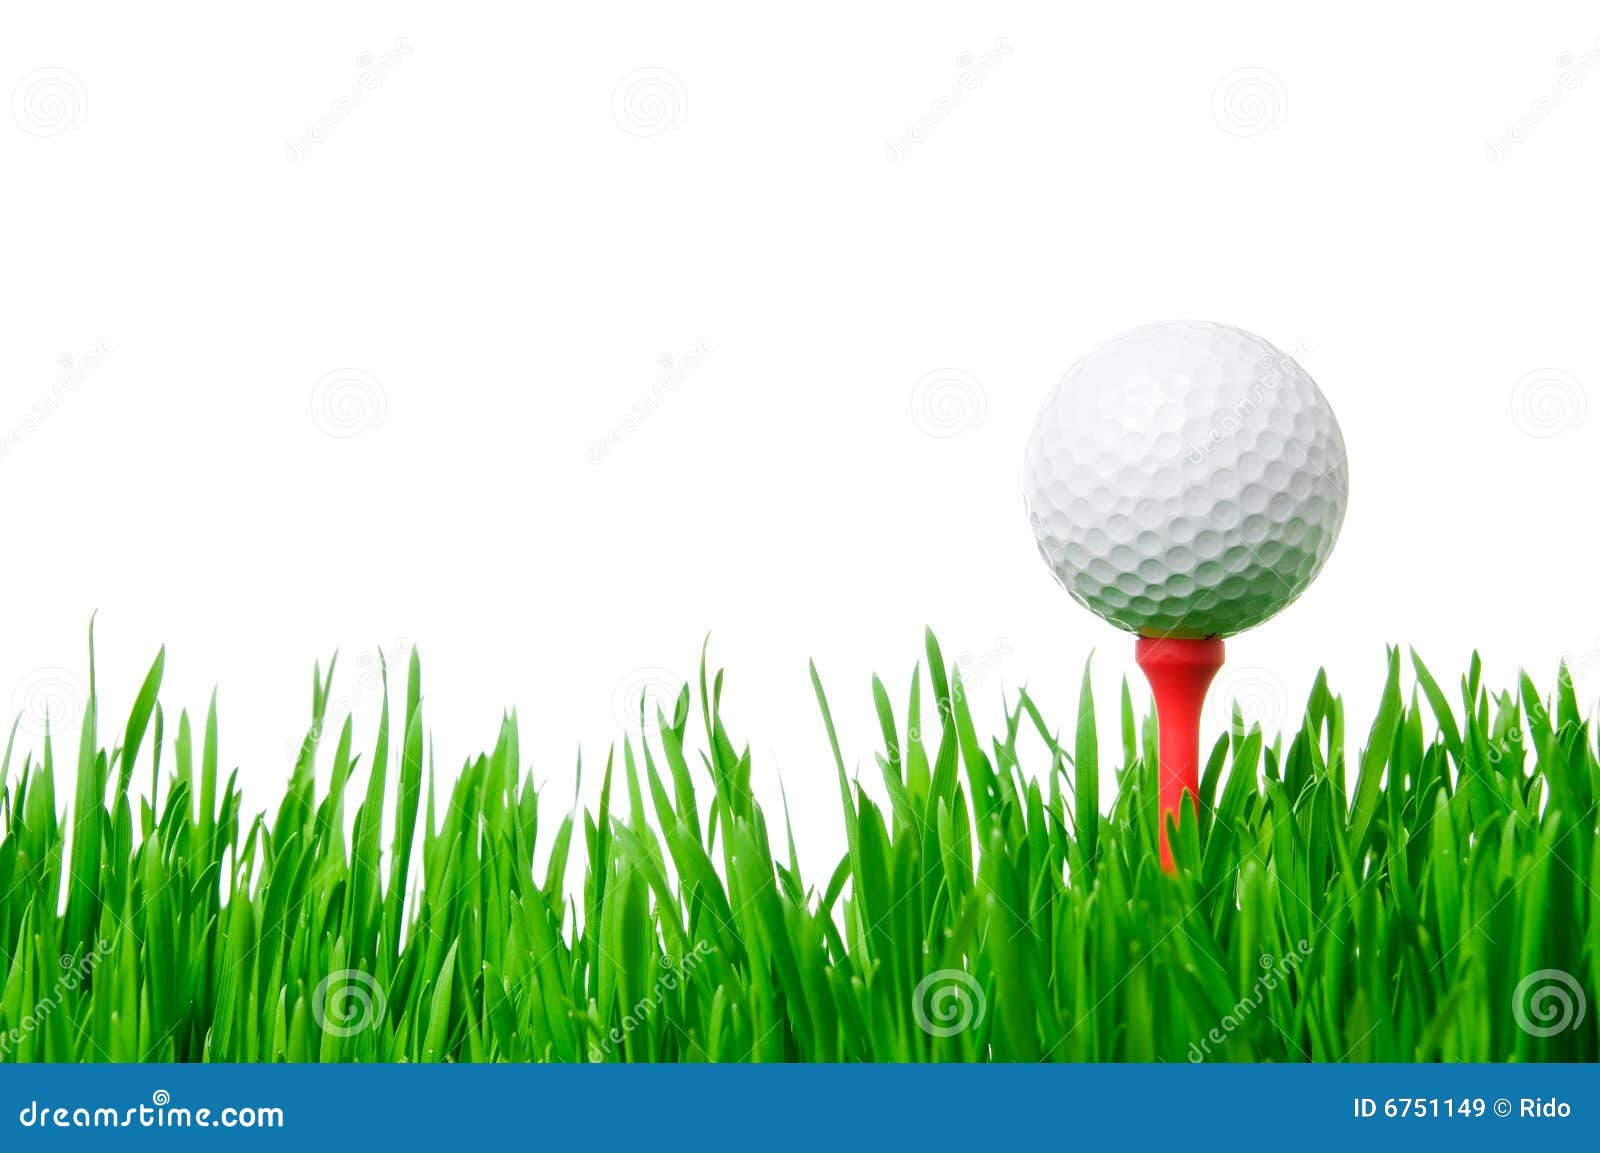 golf ball on tee 